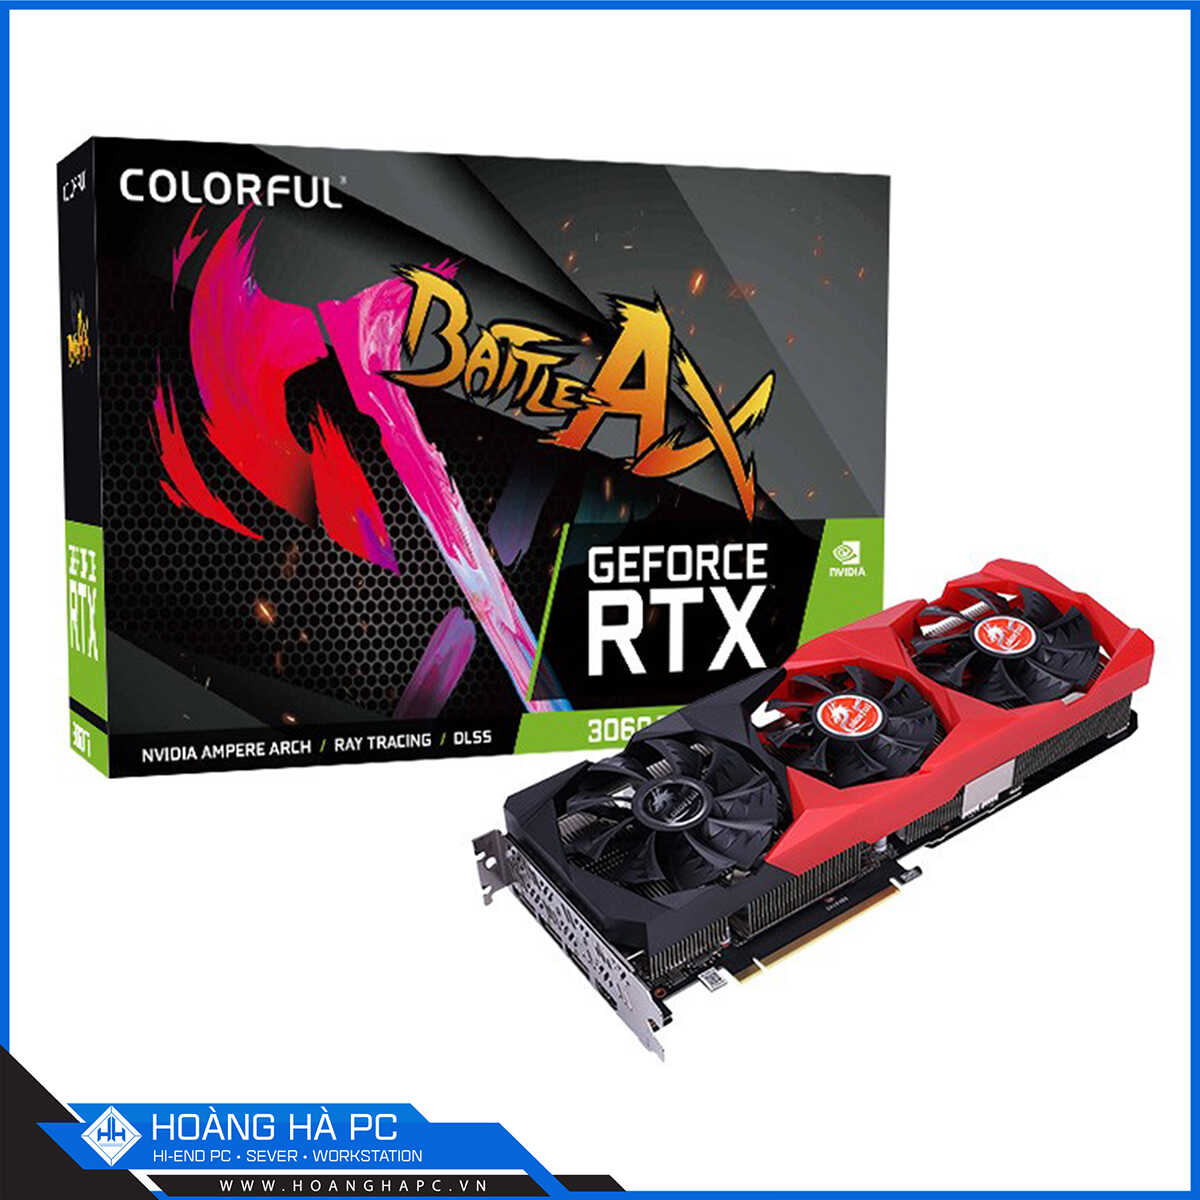 Colorful GeForce RTX 3060 Ti NB 8G-V